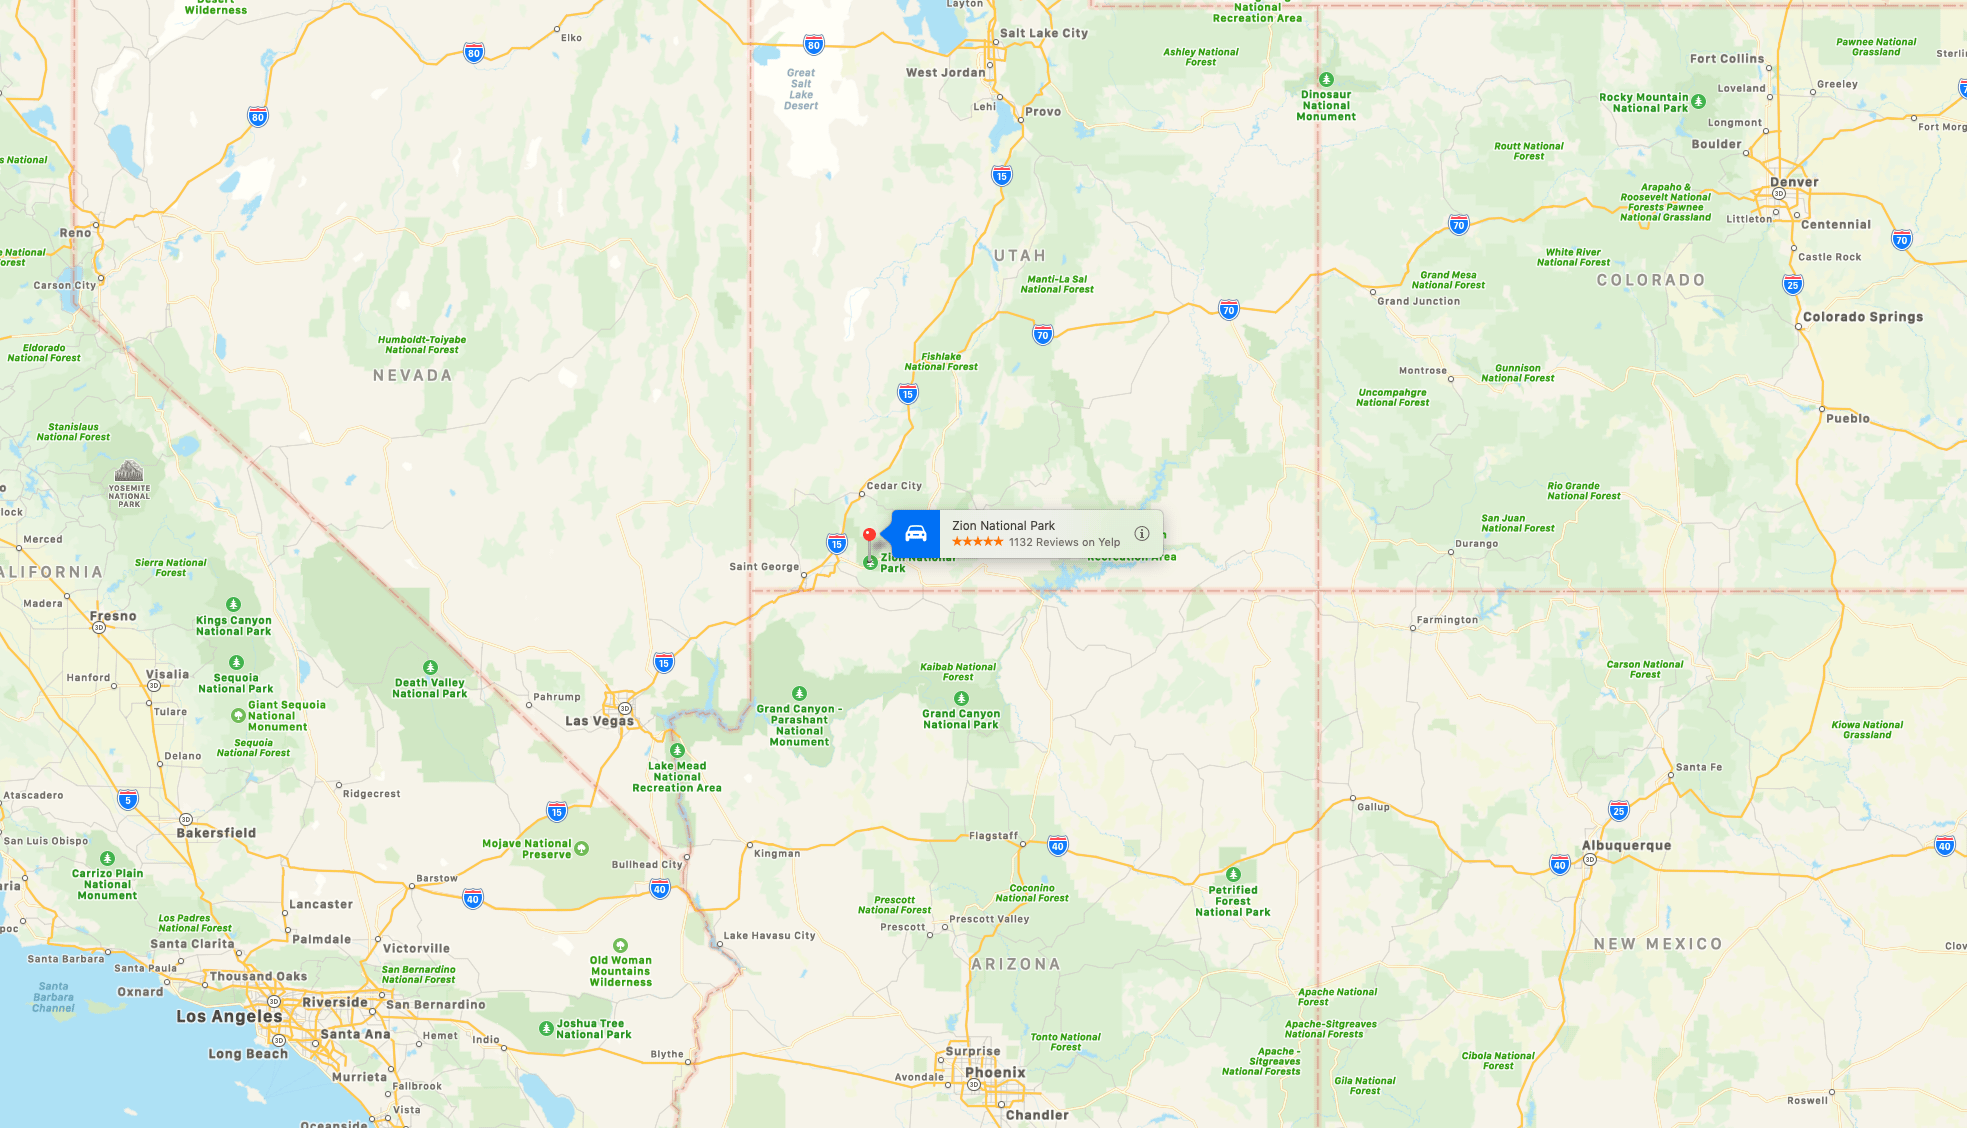 Zion national park, Utah